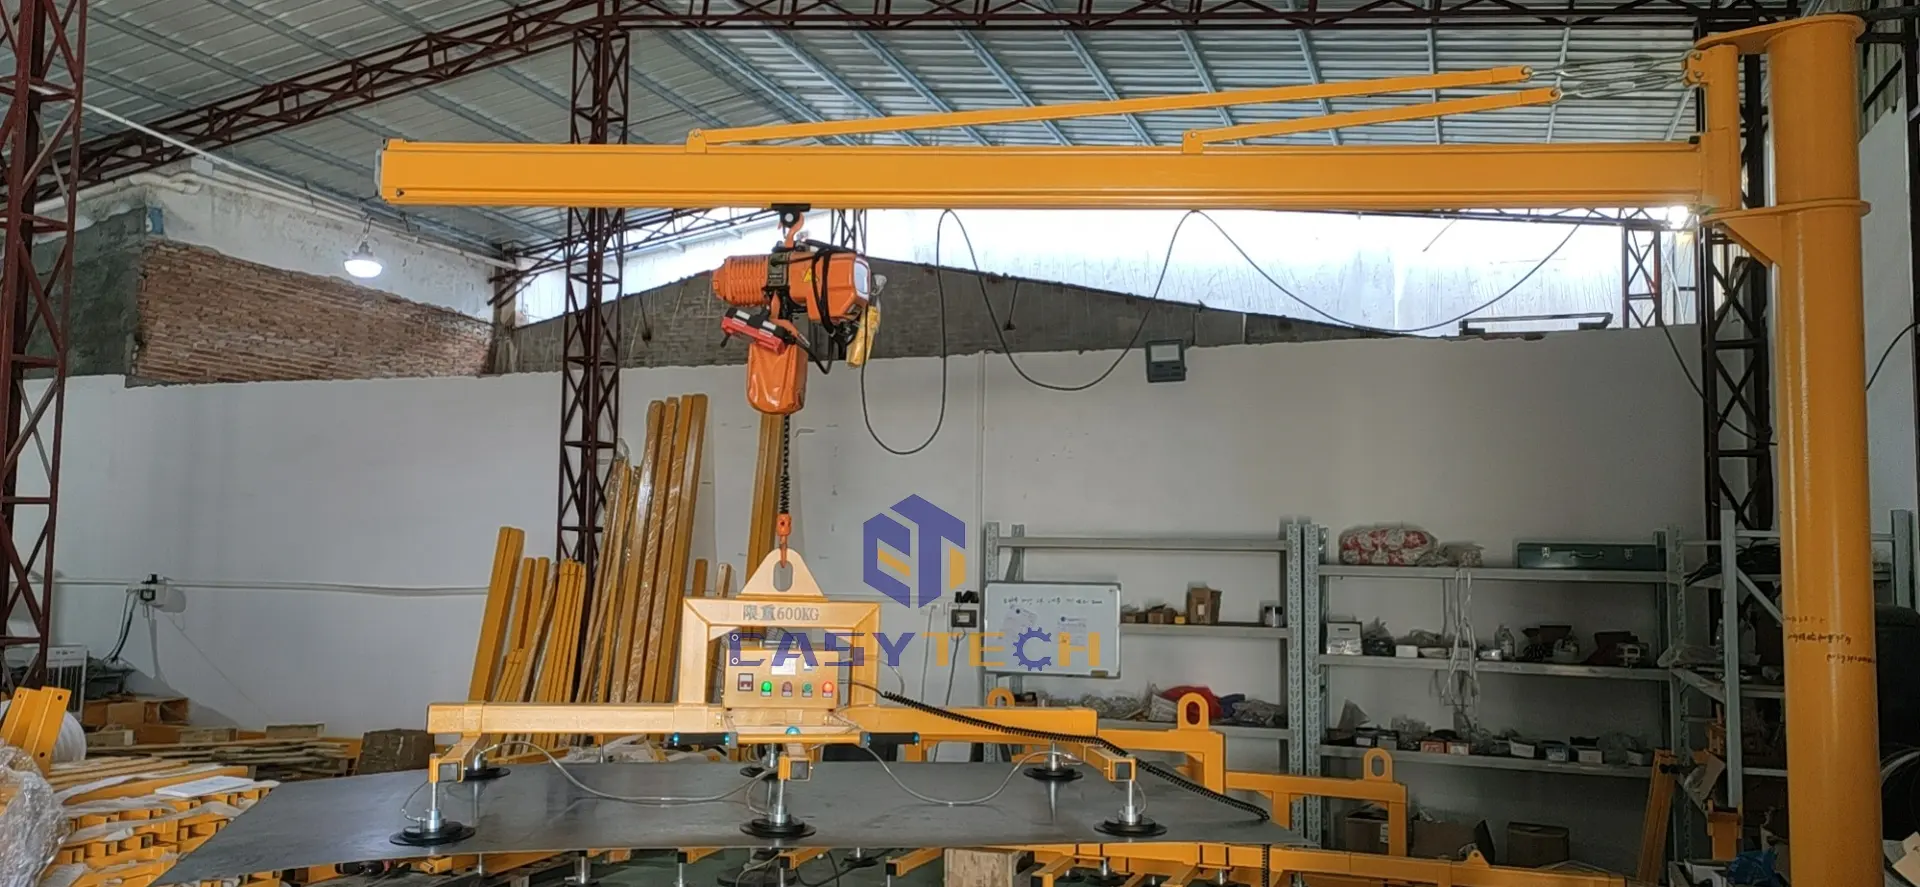 Laminate board electric metal sheet warehouse slab electrical panel vacuum crane lifter equipment